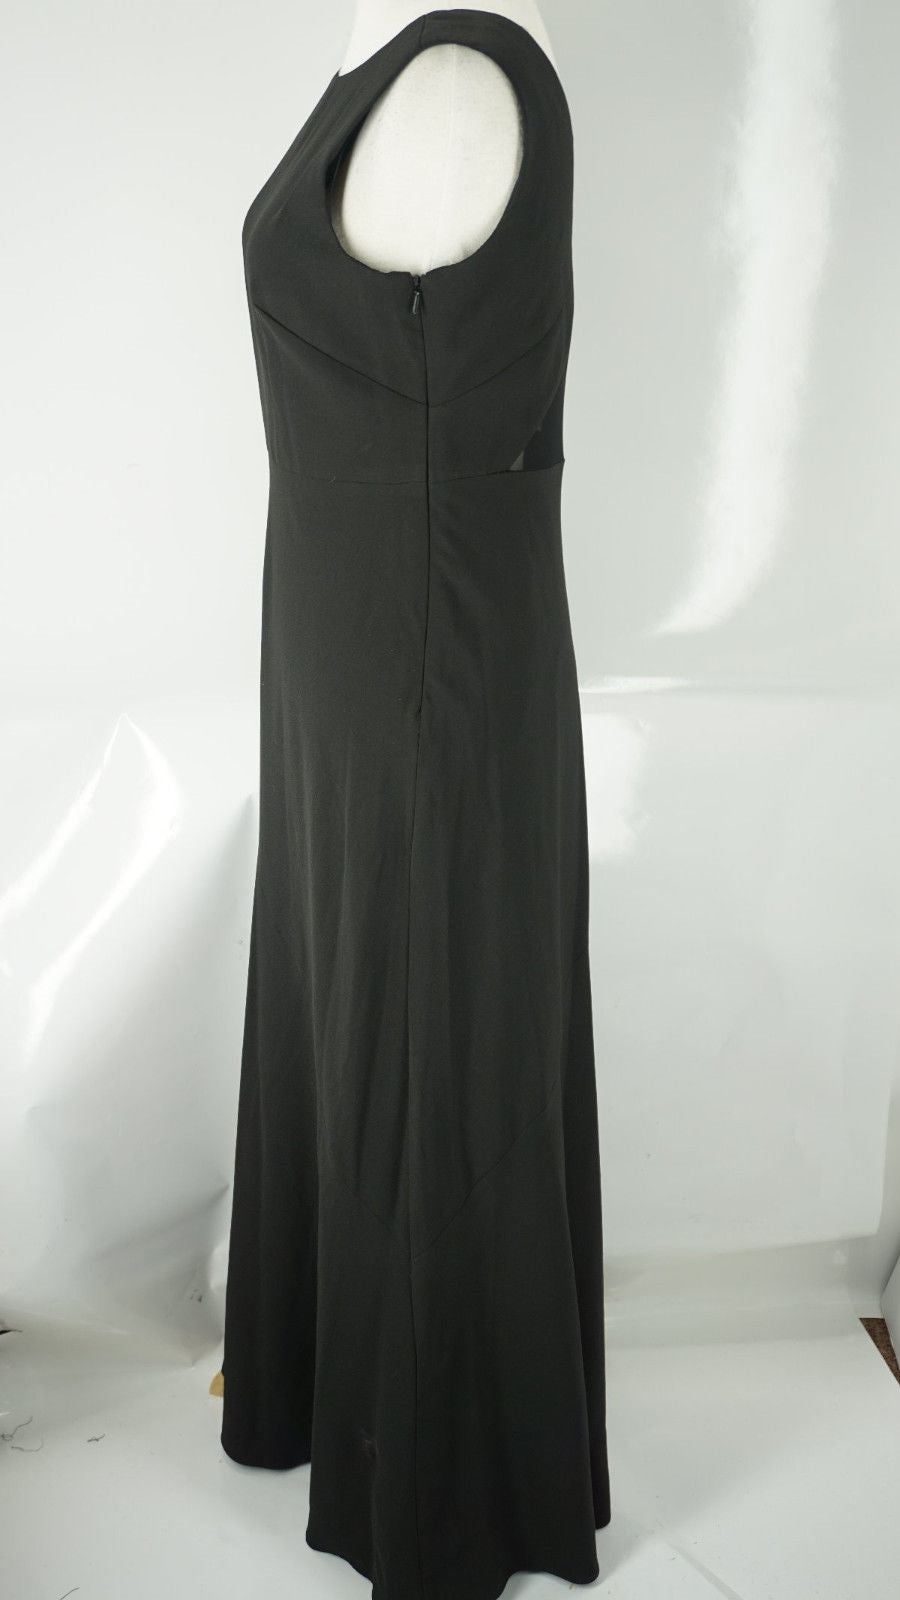 Alex Evenings Formal Black Gown Dress Black size 4 Petite LBD Mesh back